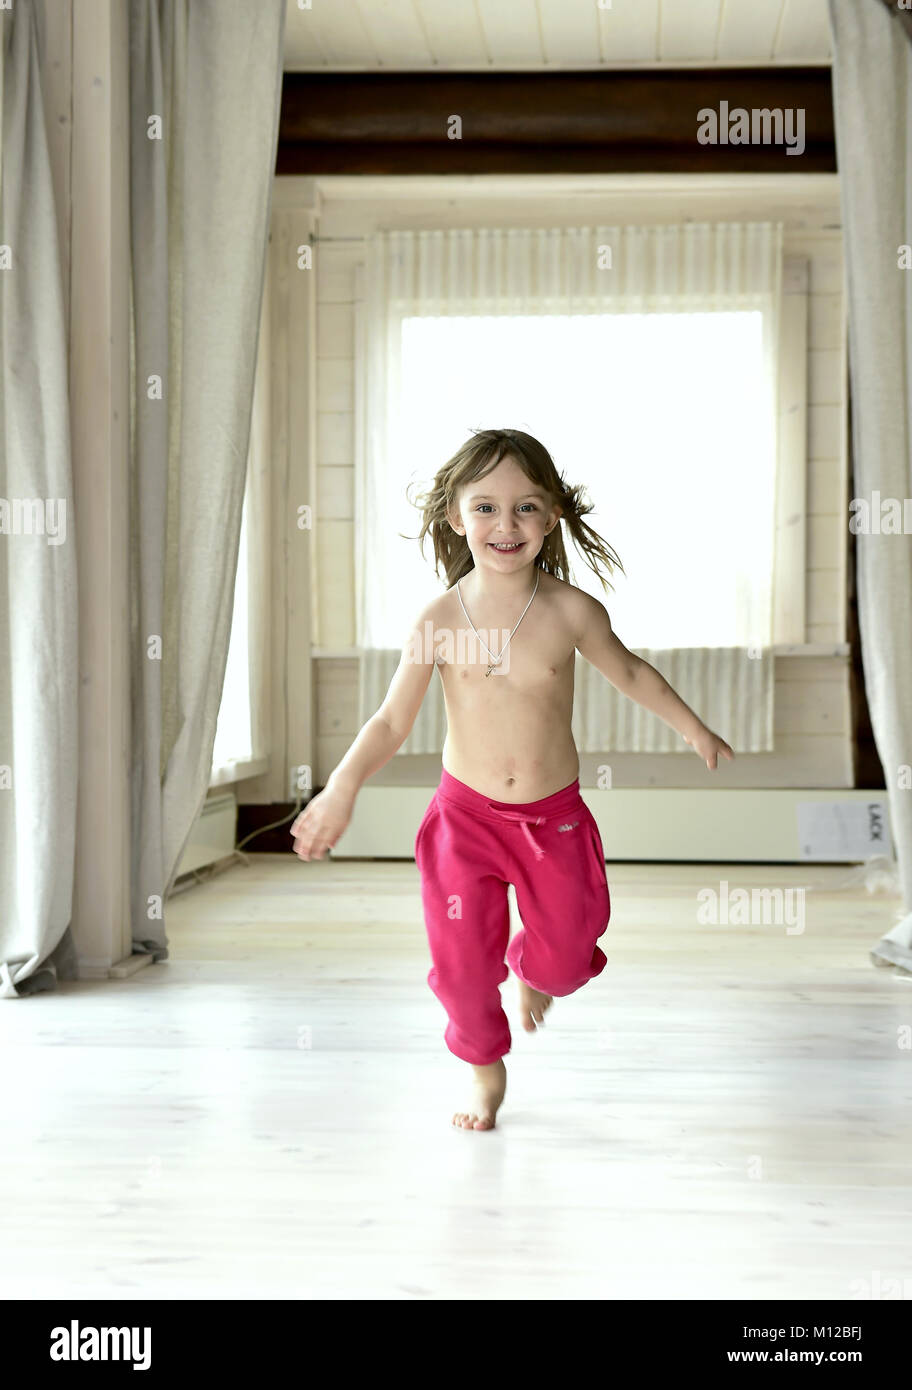 https://c8.alamy.com/comp/M12BFJ/happy-smiling-little-girl-wearing-red-pants-on-white-floor-M12BFJ.jpg